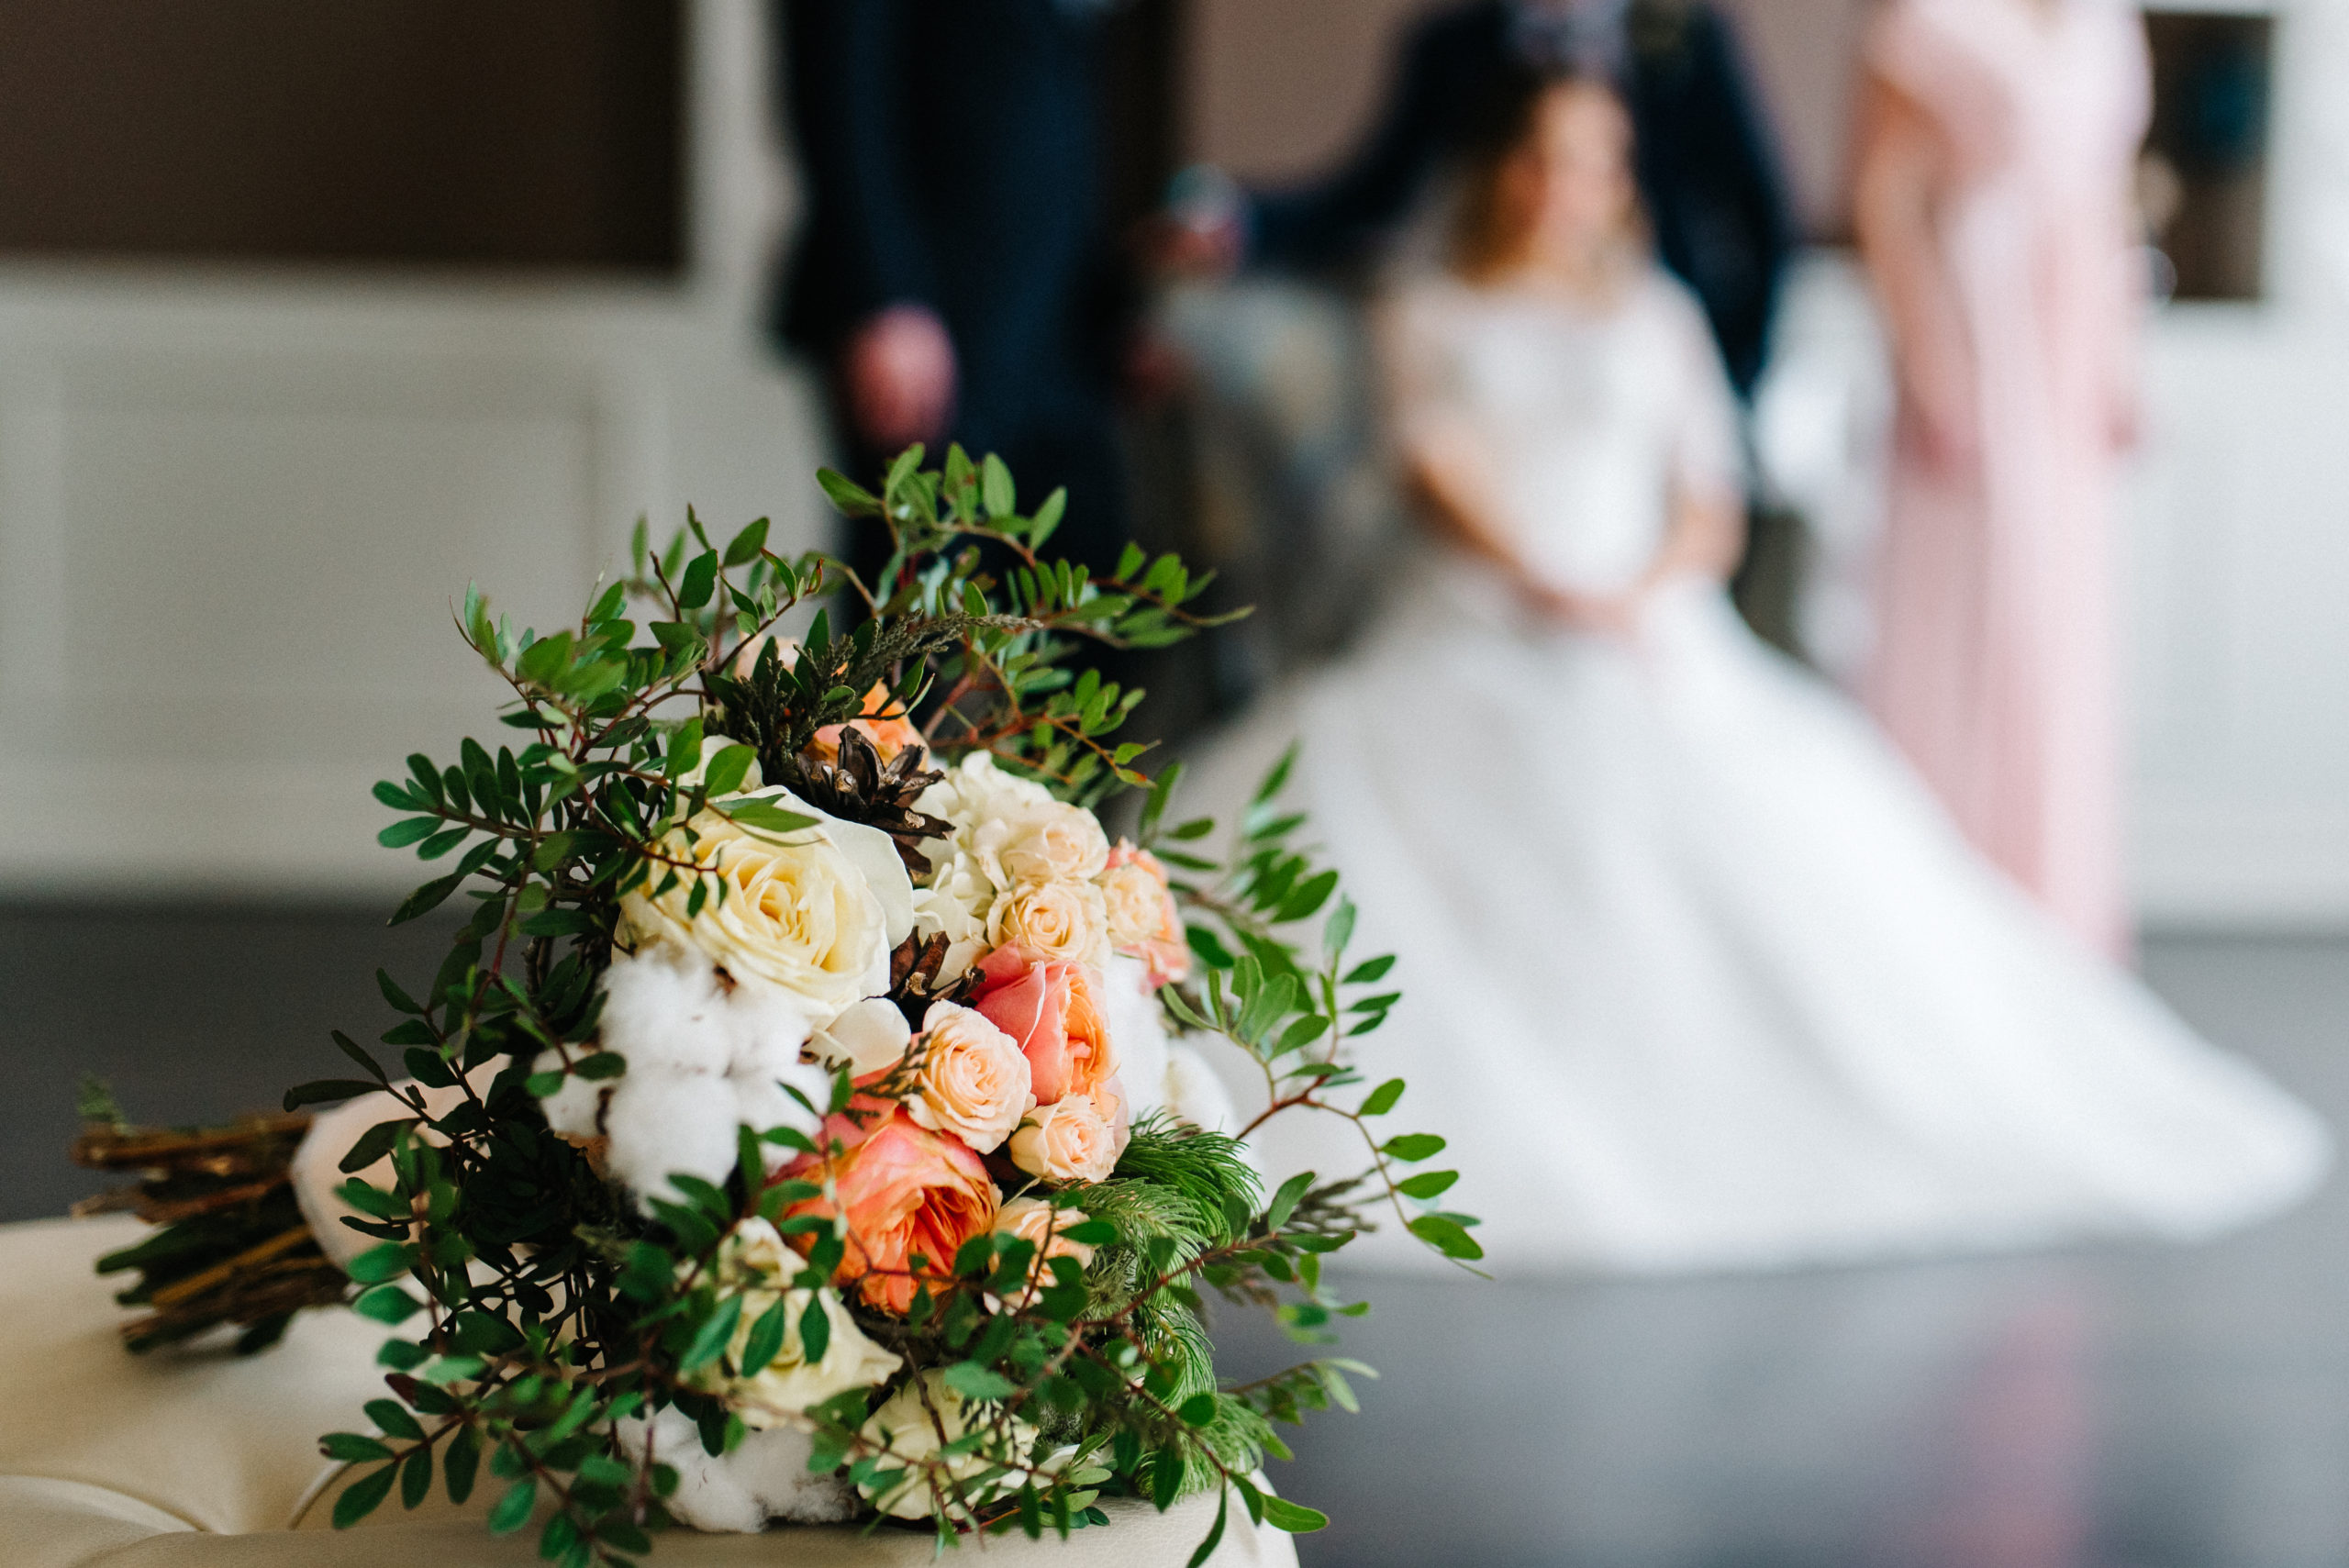 5 Creative Ideas for an Unforgettable Wedding Celebration